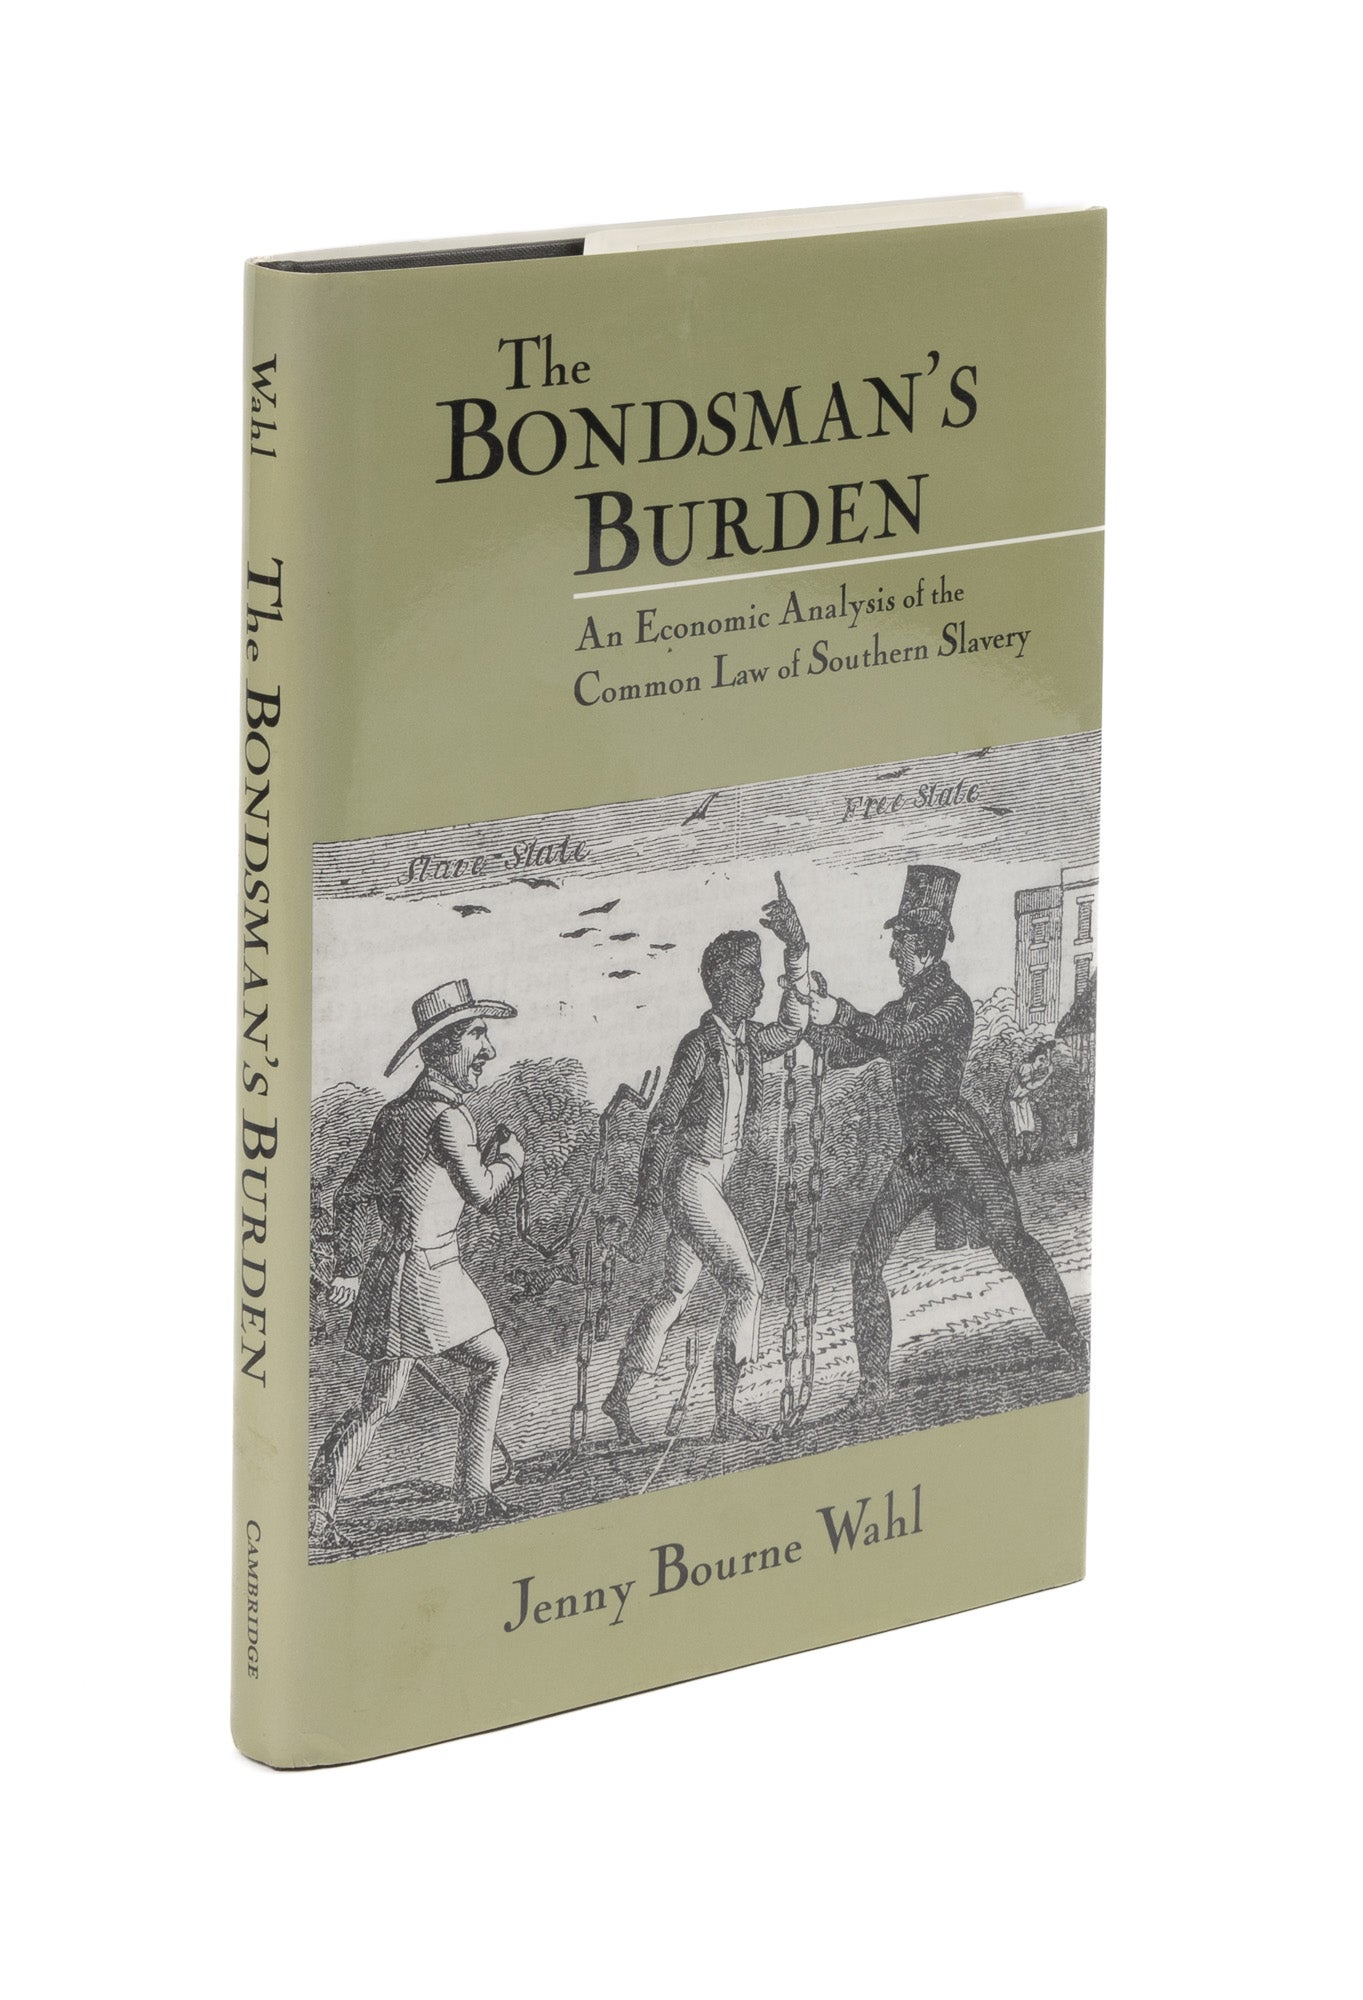 The Bondsman's Burden: An Economic Analysis of the Common Law of